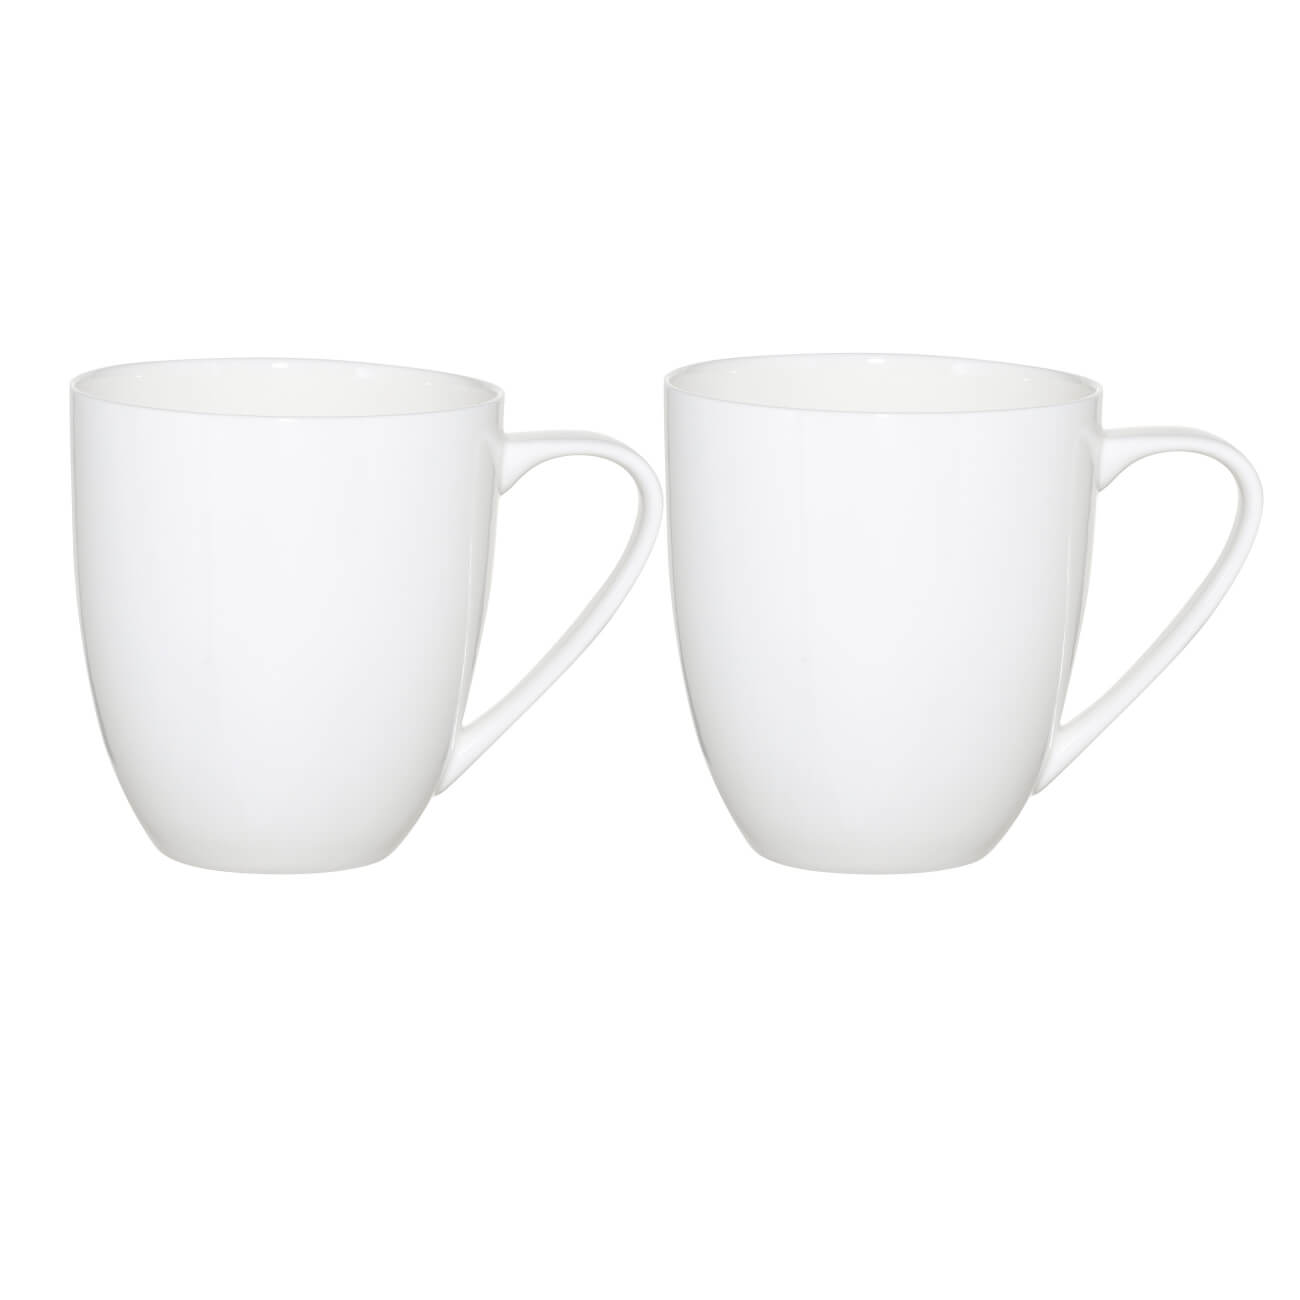 Mug, 450 ml, 2 pcs, porcelain F, white, Ideal white изображение № 1